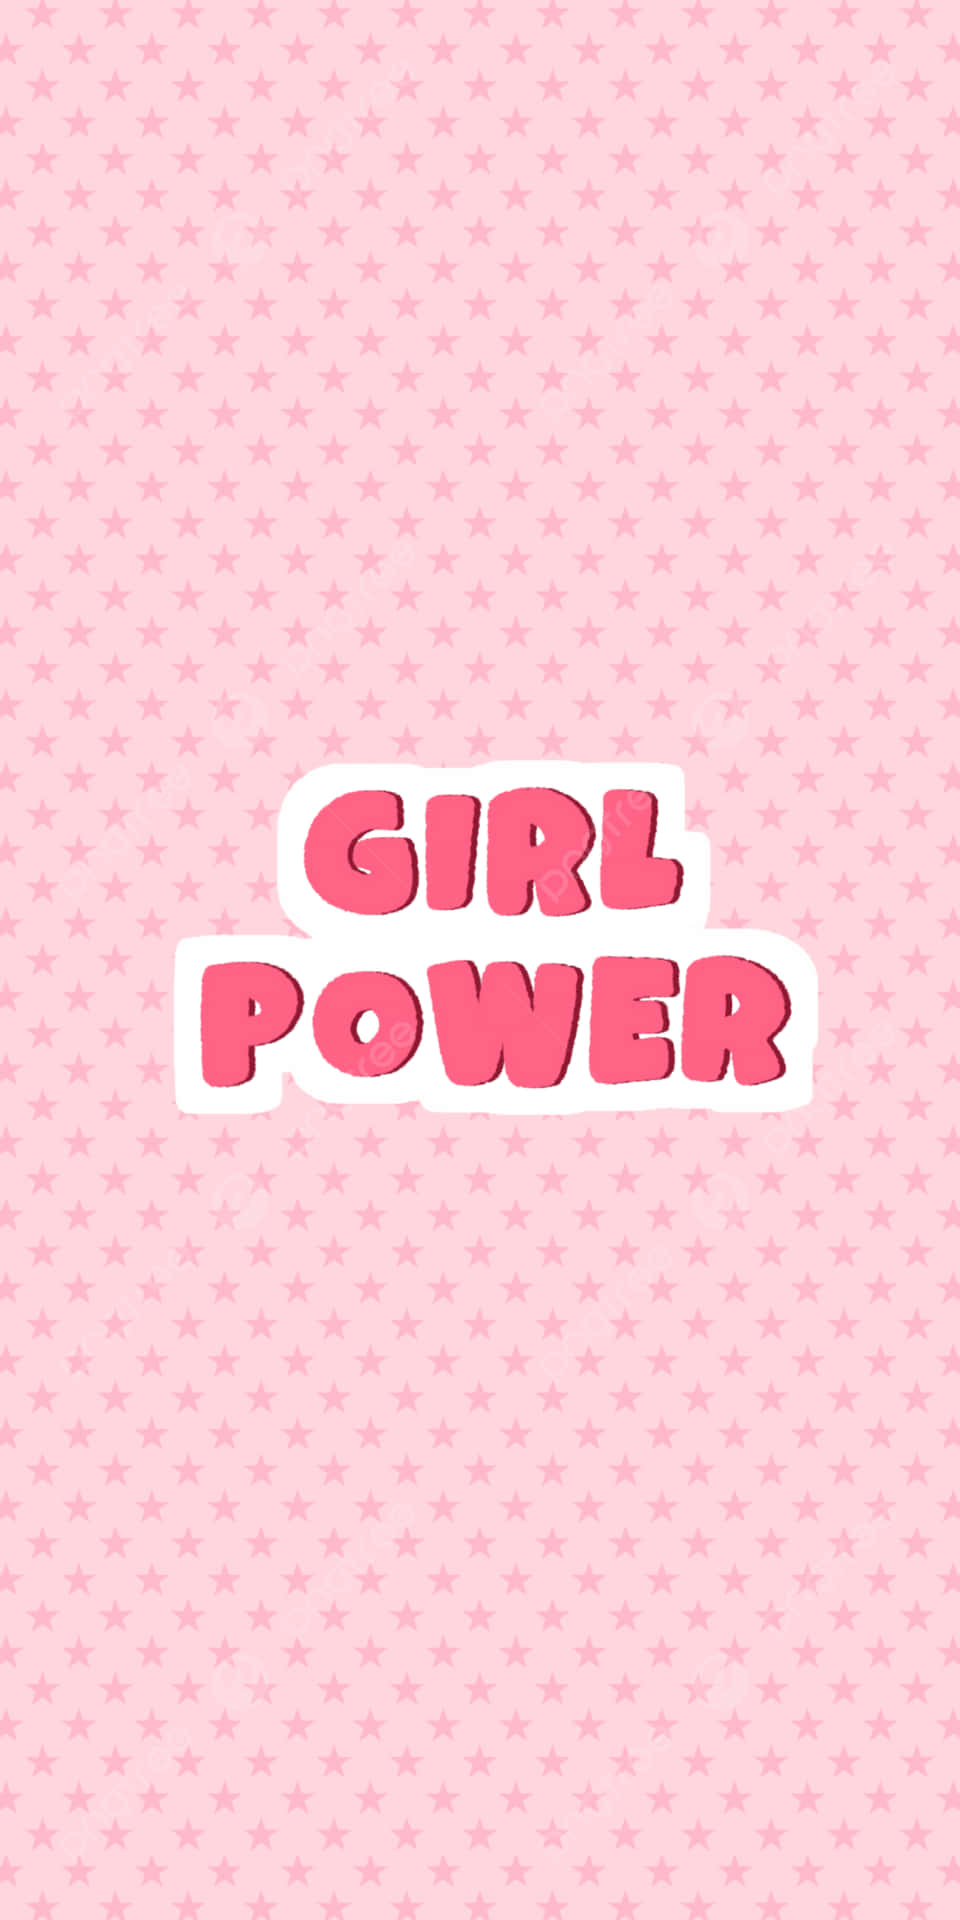 Girl Power Pink Stars Background Wallpaper